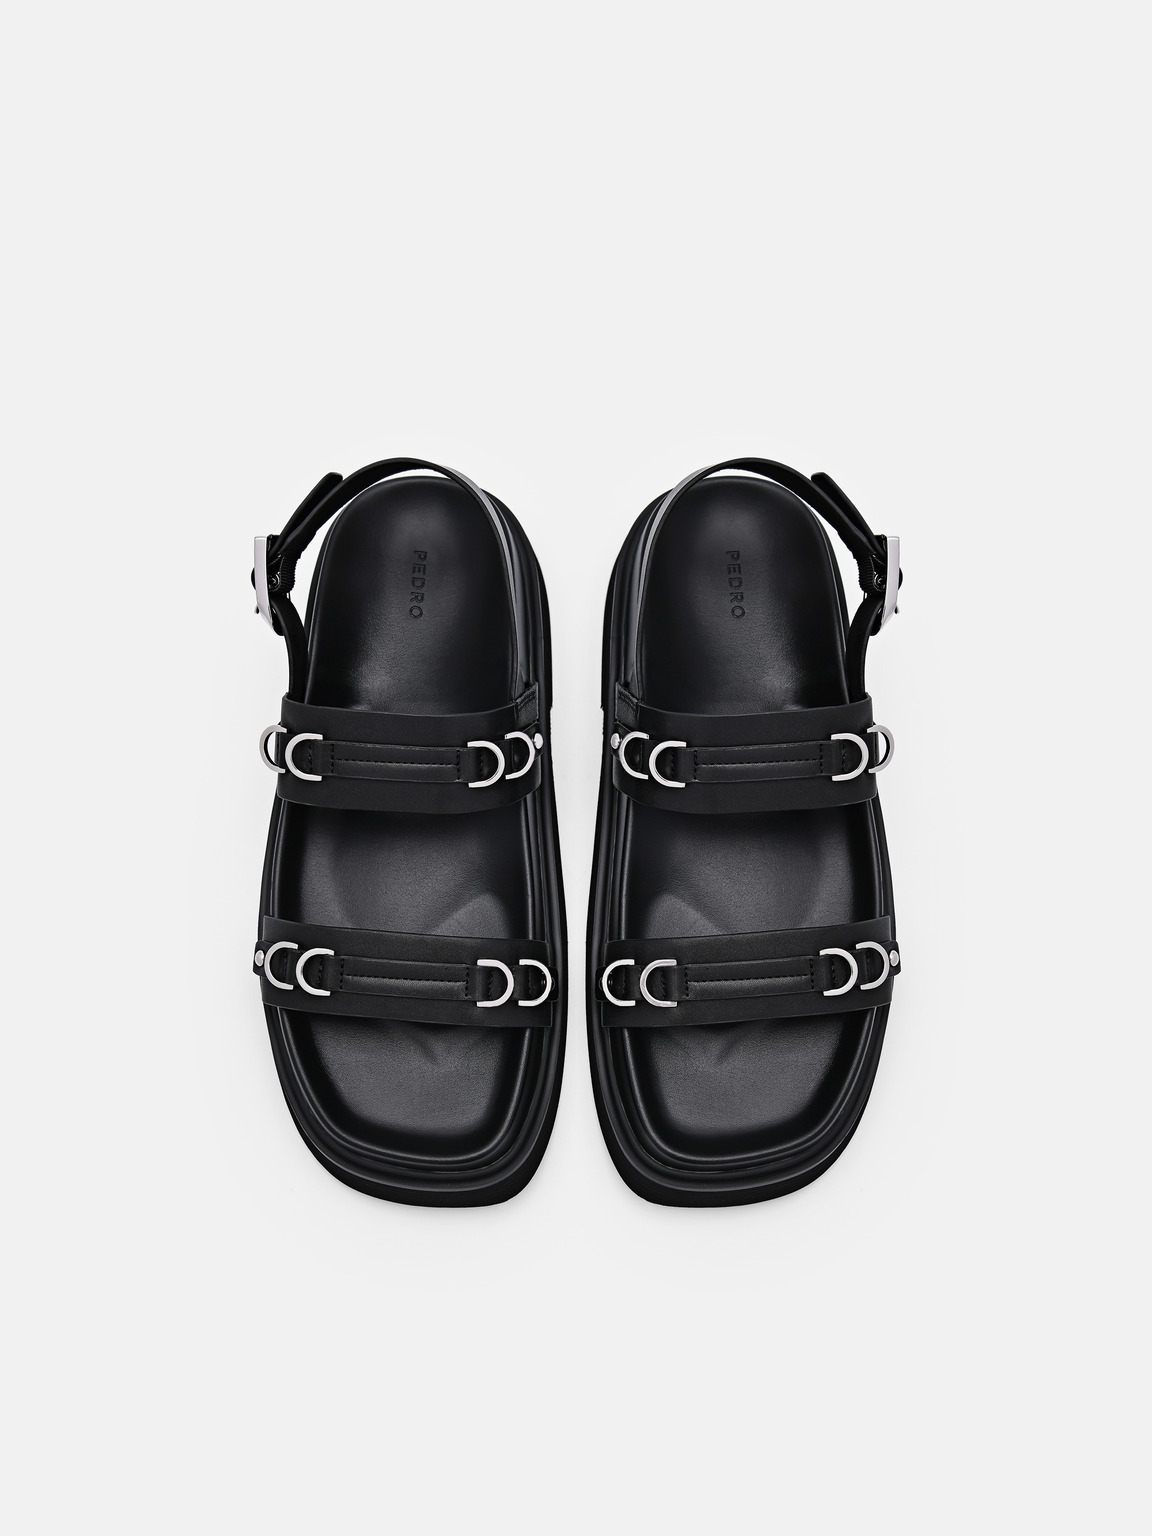 Helix Slingback Sandals, Black